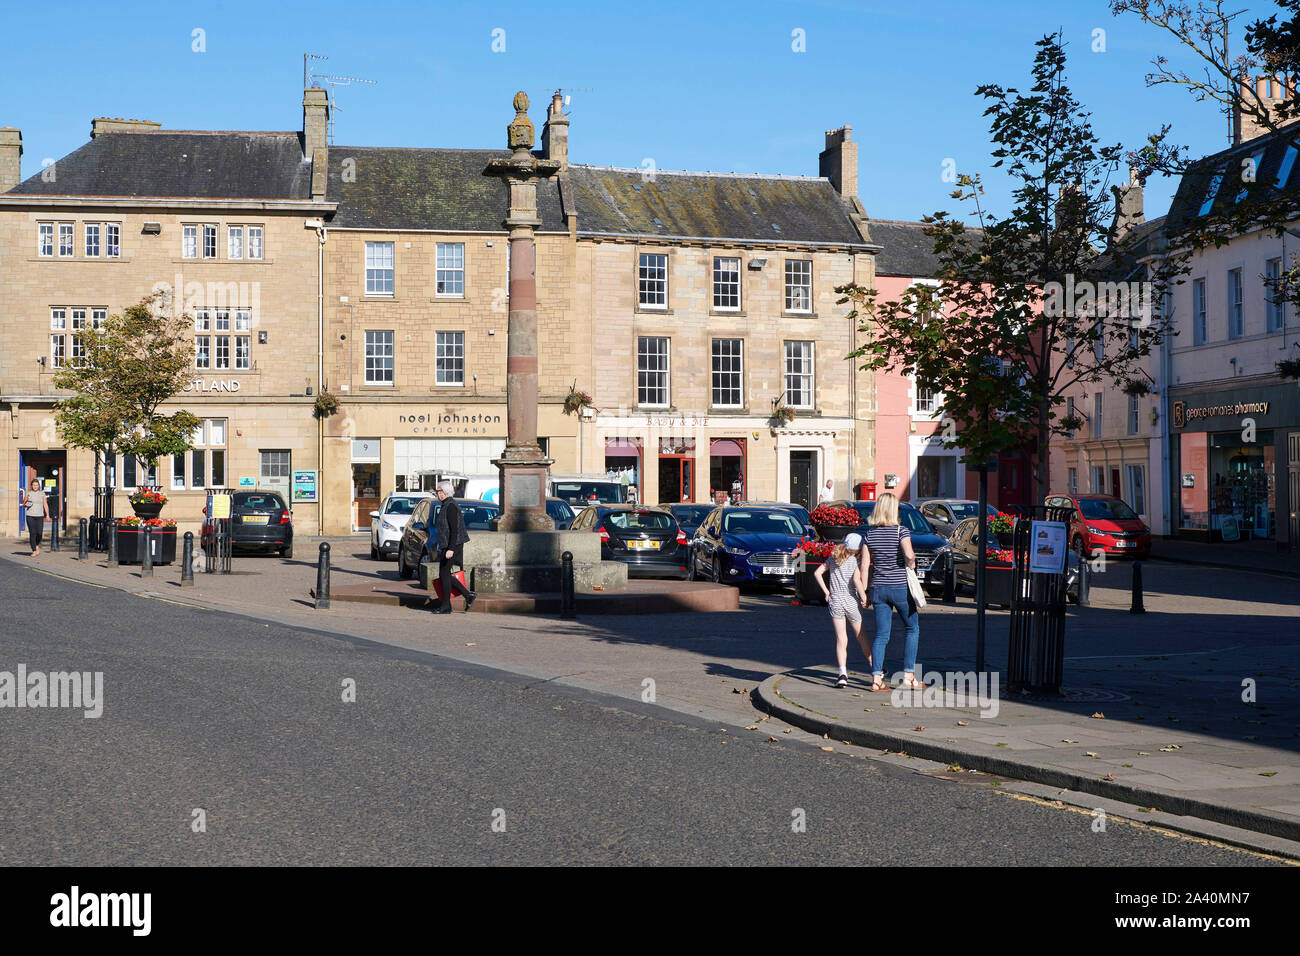 The historic borders town of Duns, Berwickshire, Southern Scotland, UK Stock Photo